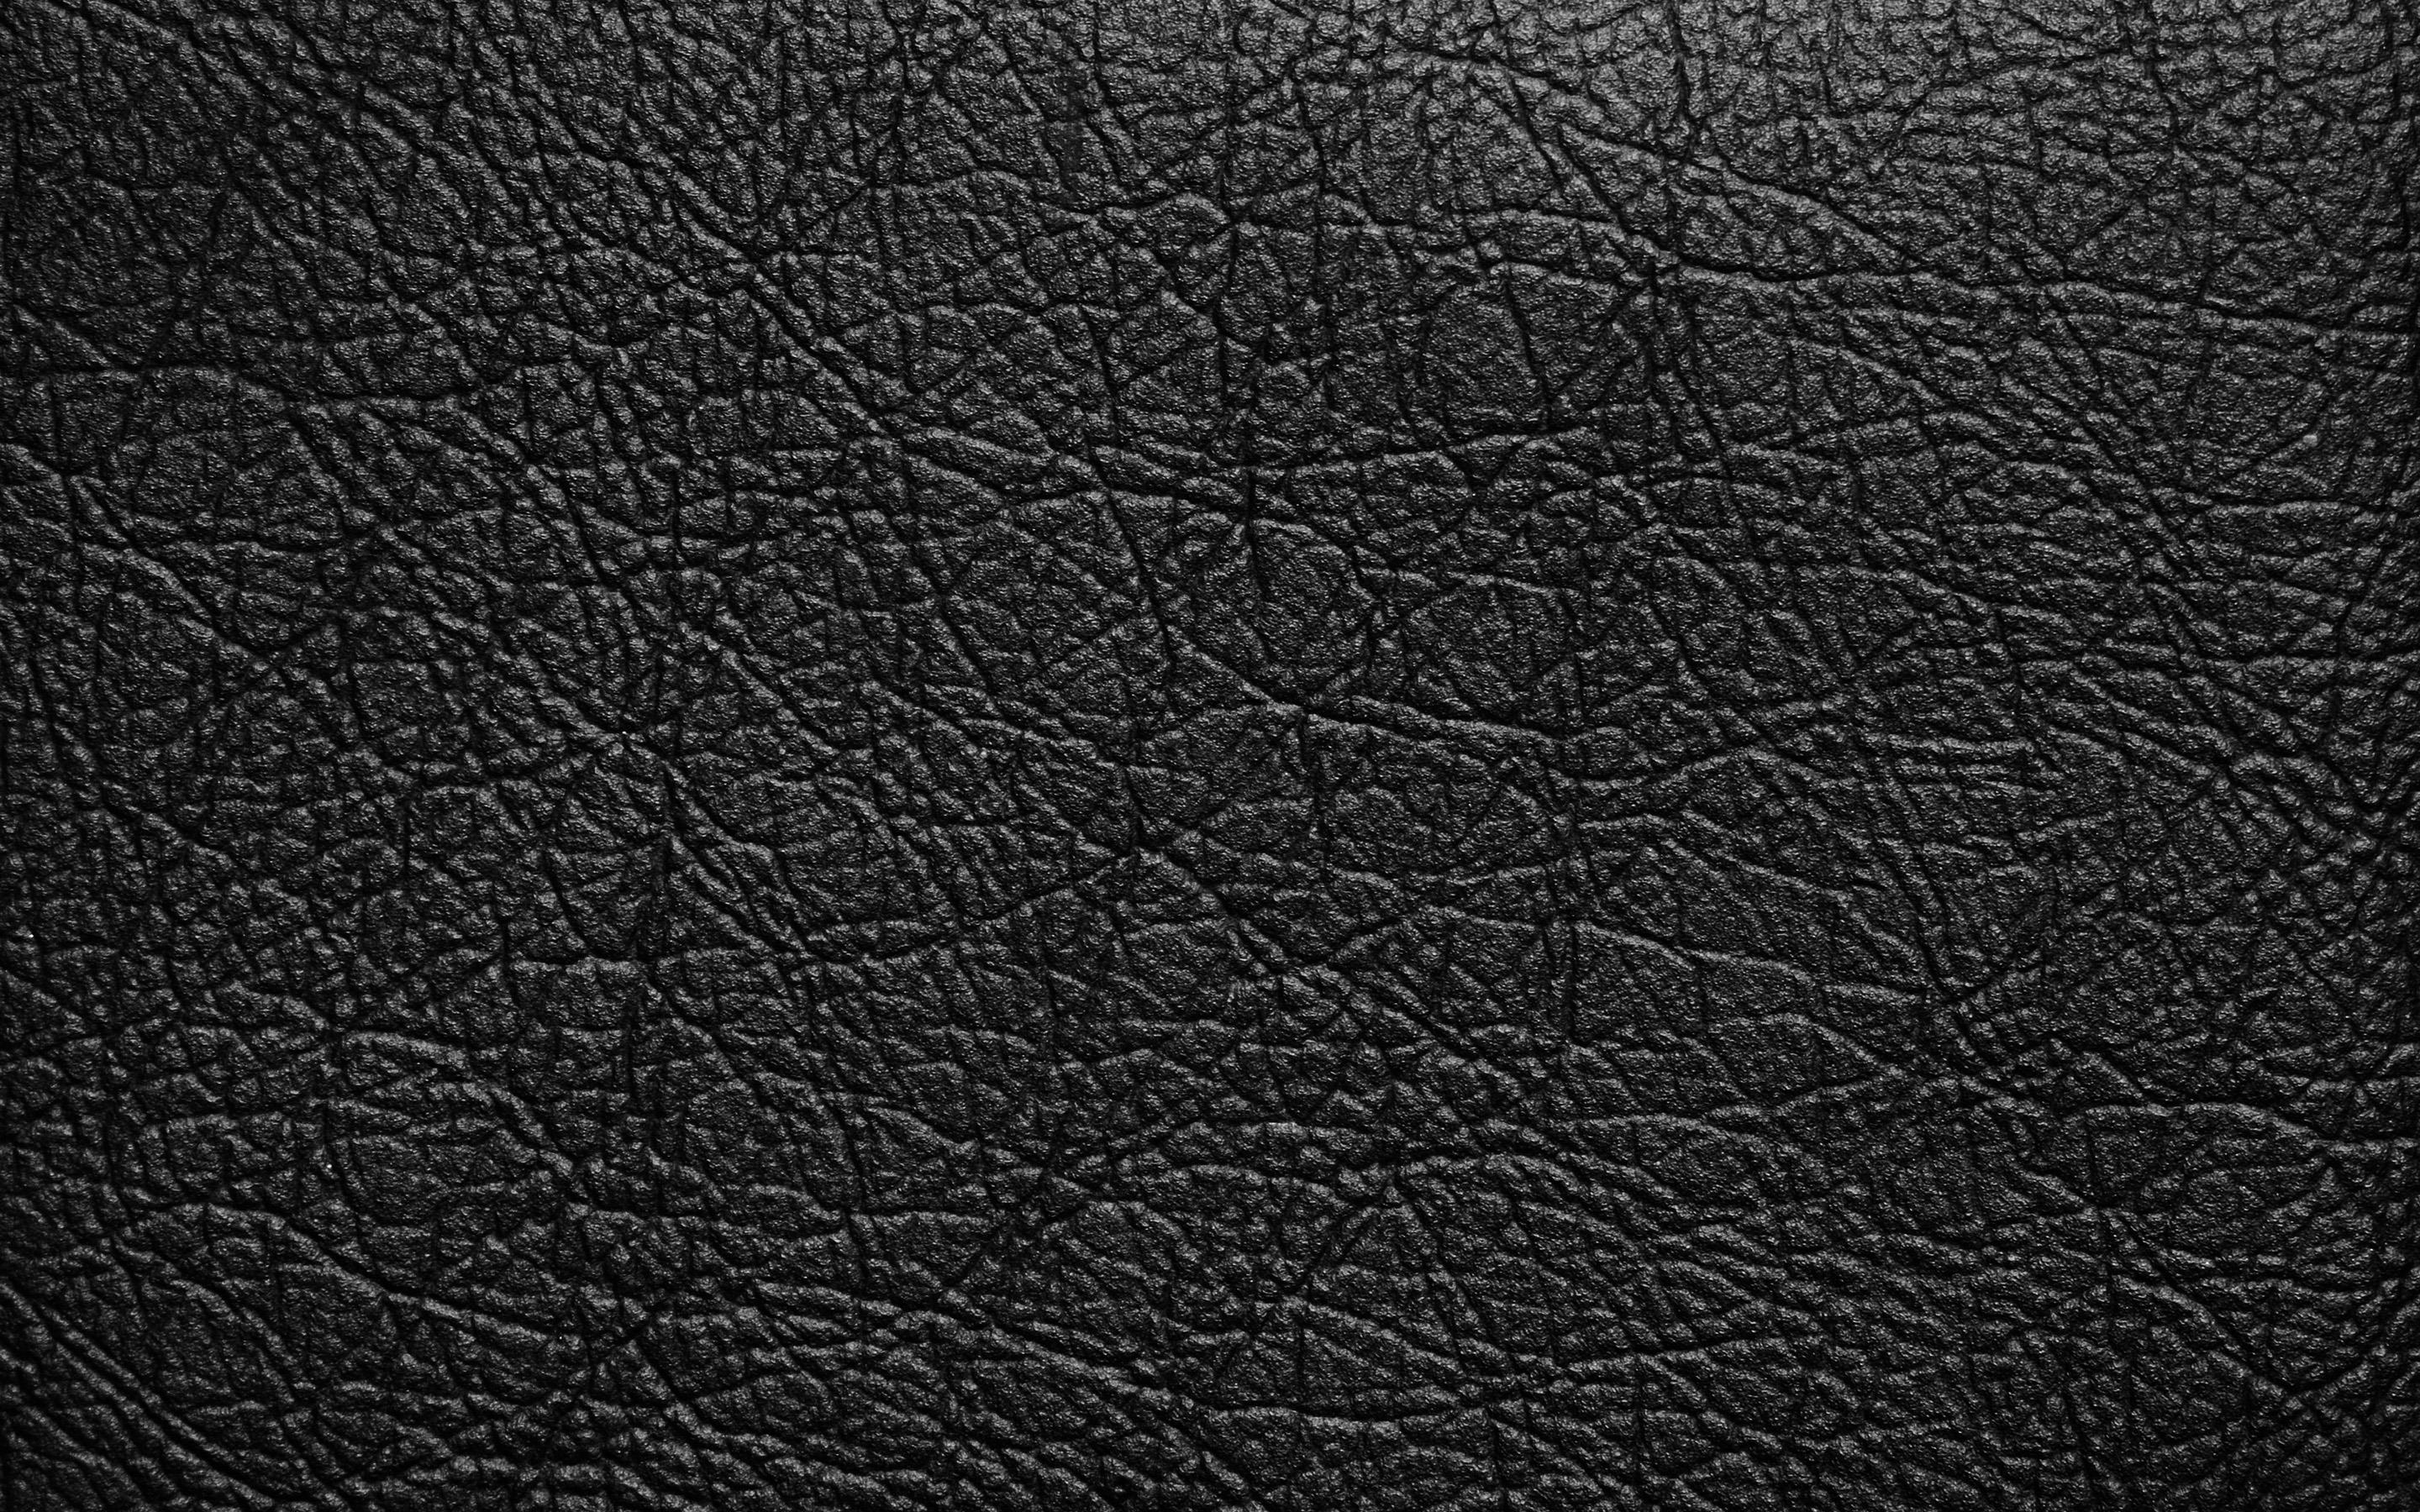 Worn Leather Texture